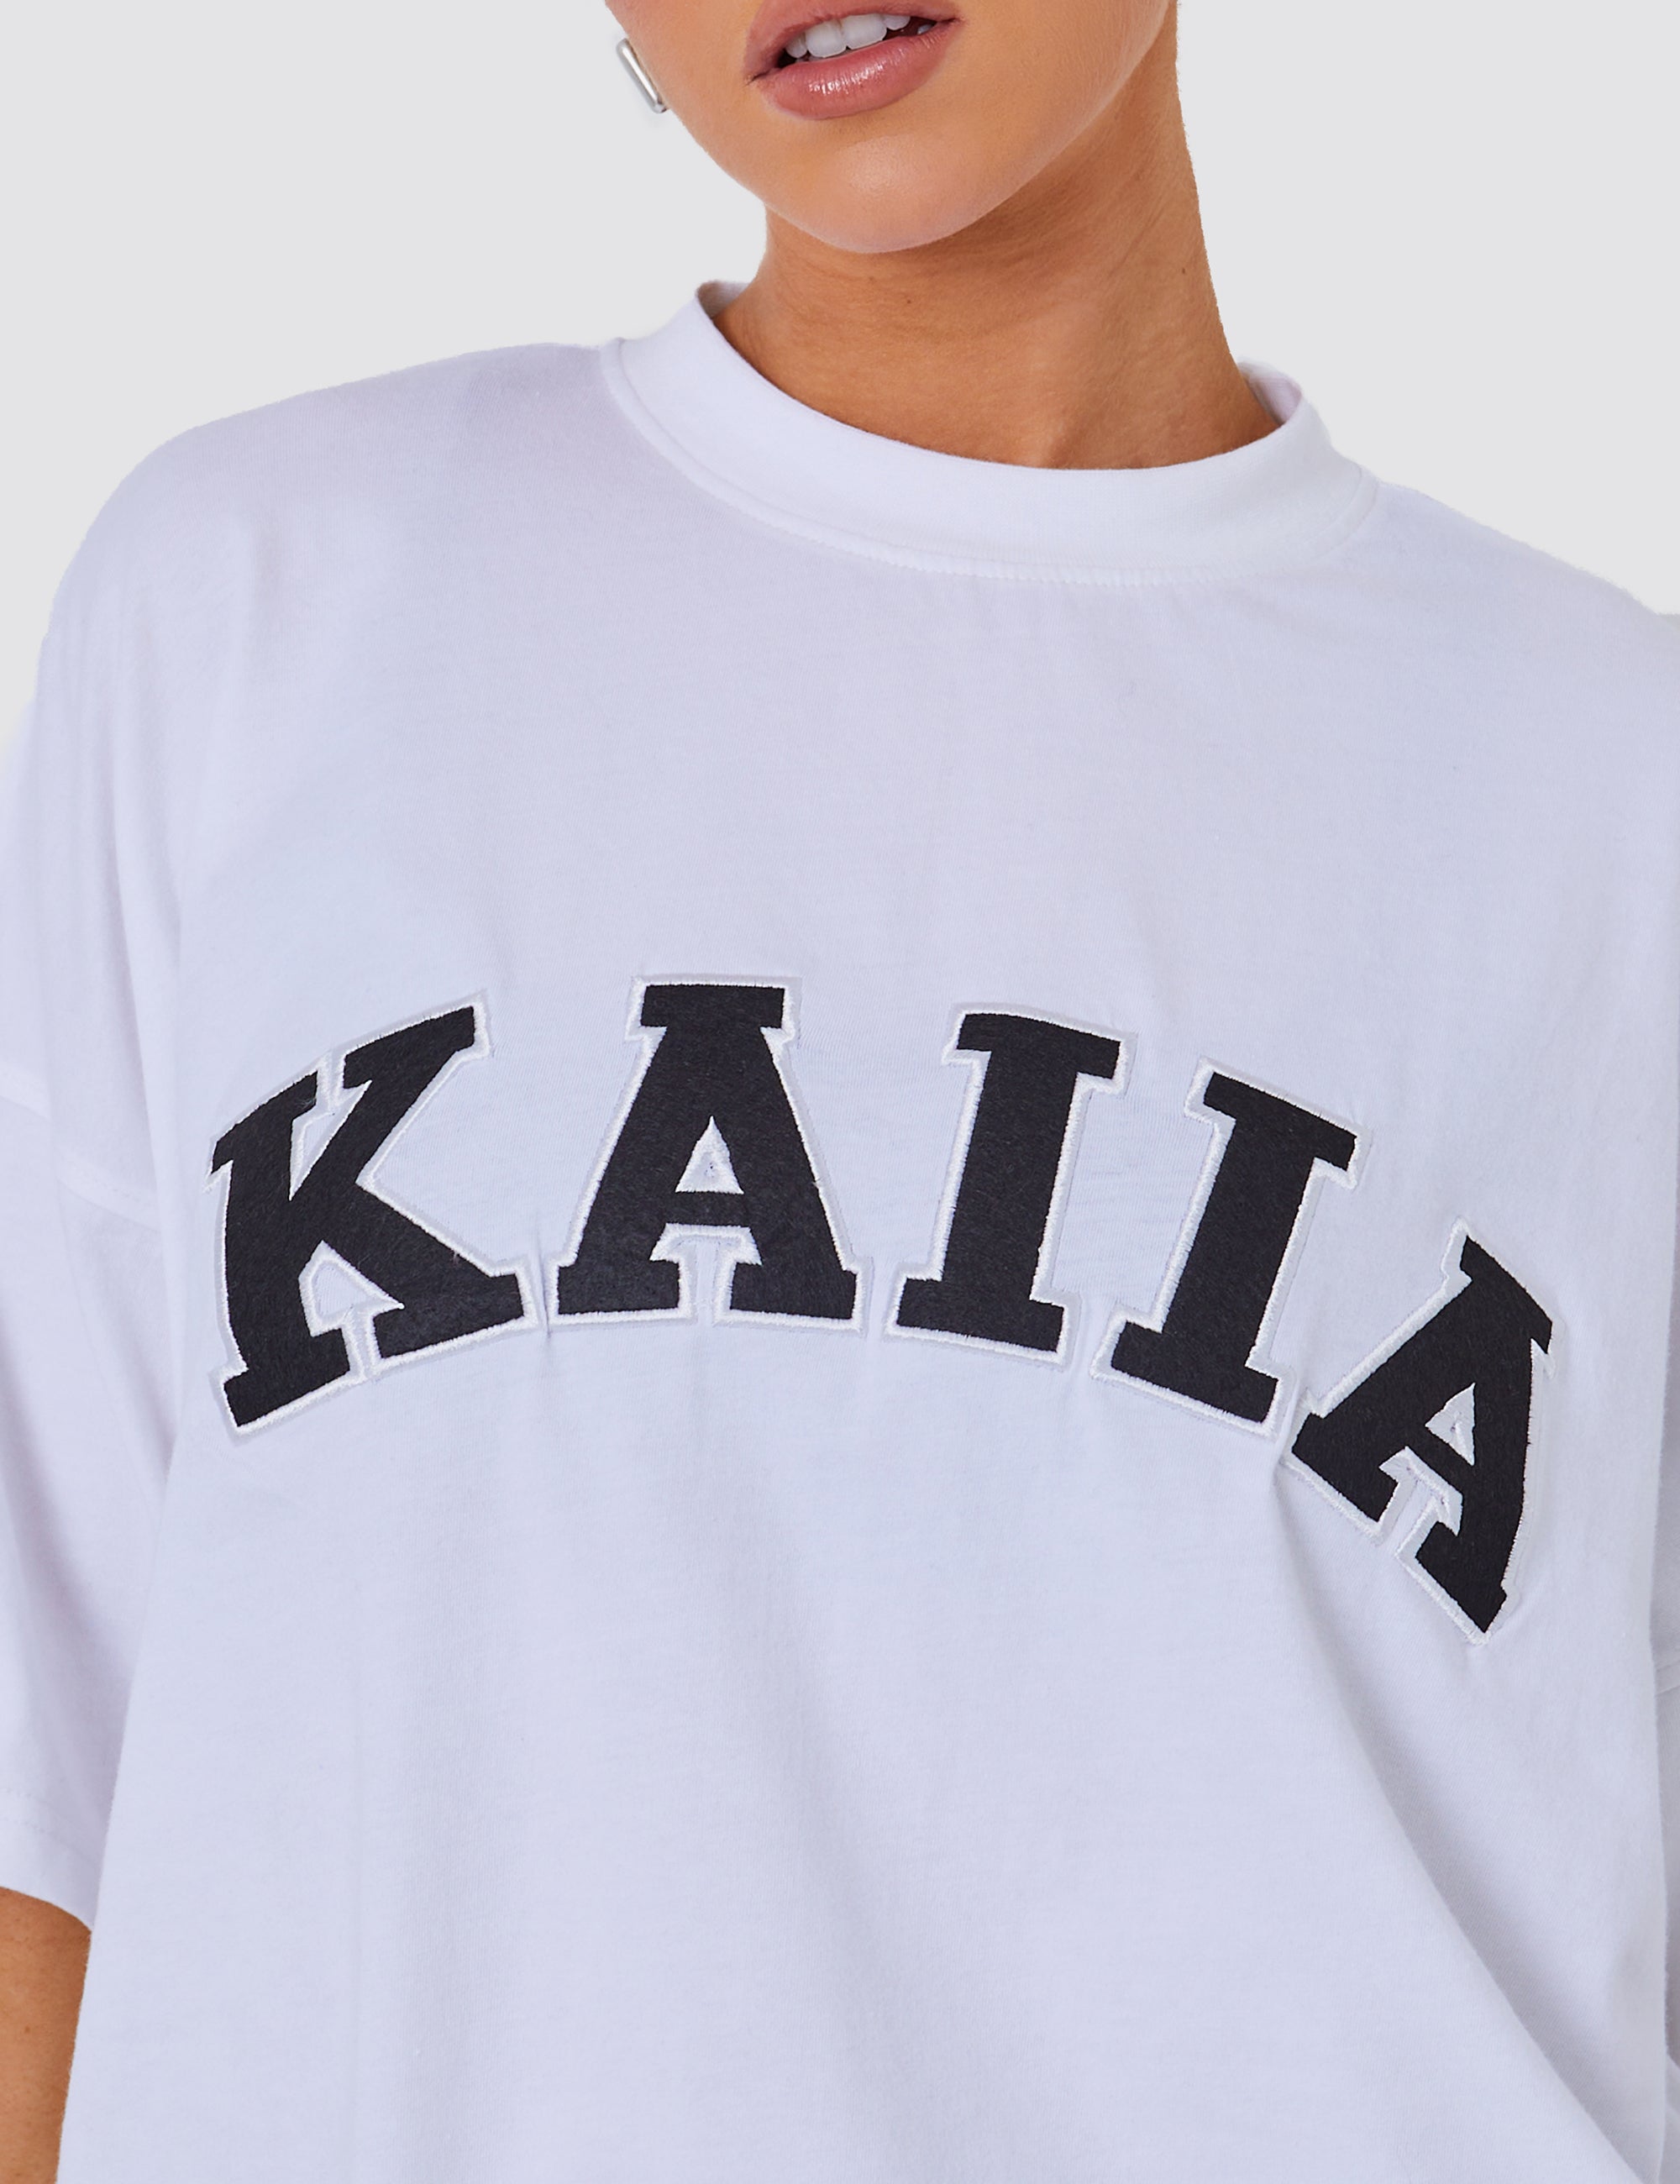 Kaiia Oversized T-shirt in White & Black